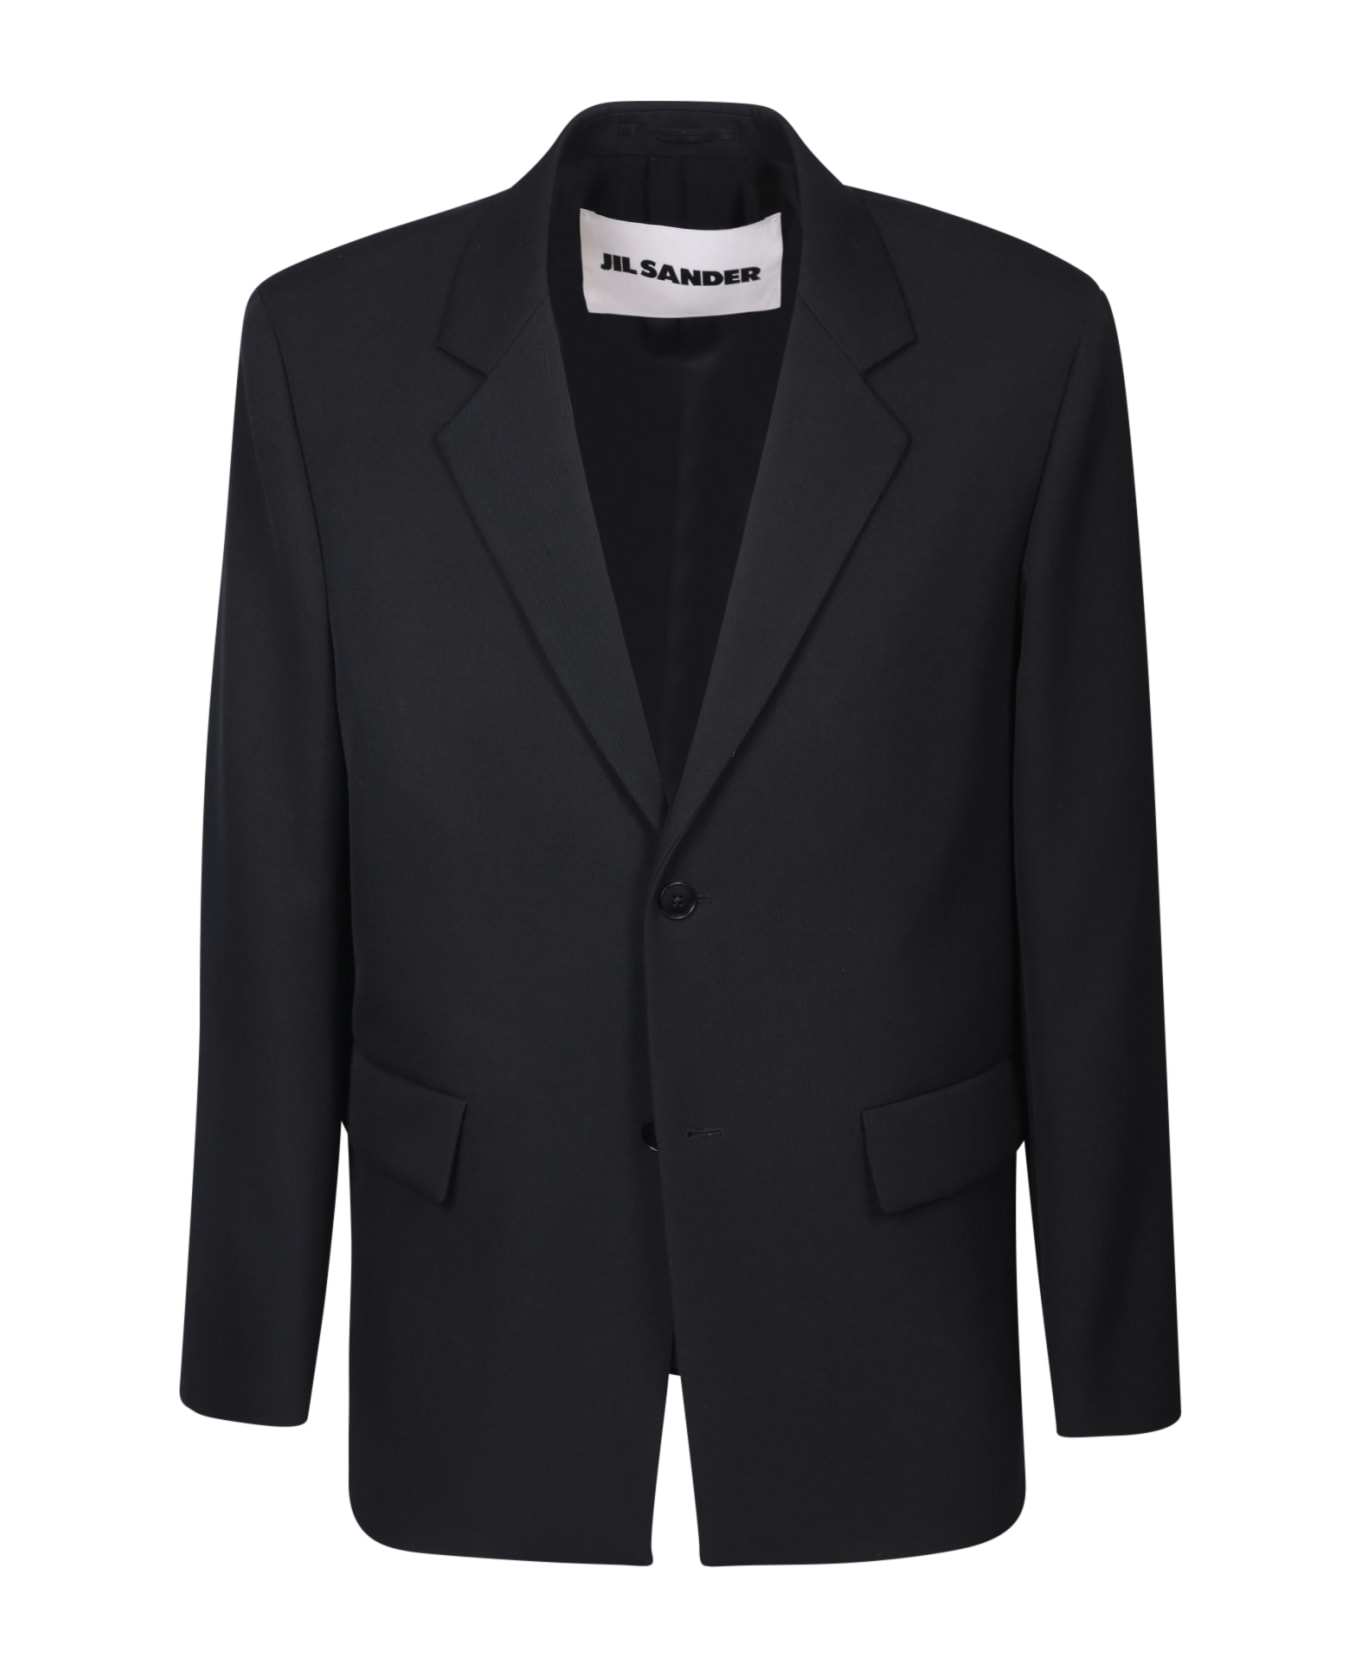 Jil Sander Single-breasted Jacket Black Suit - Black